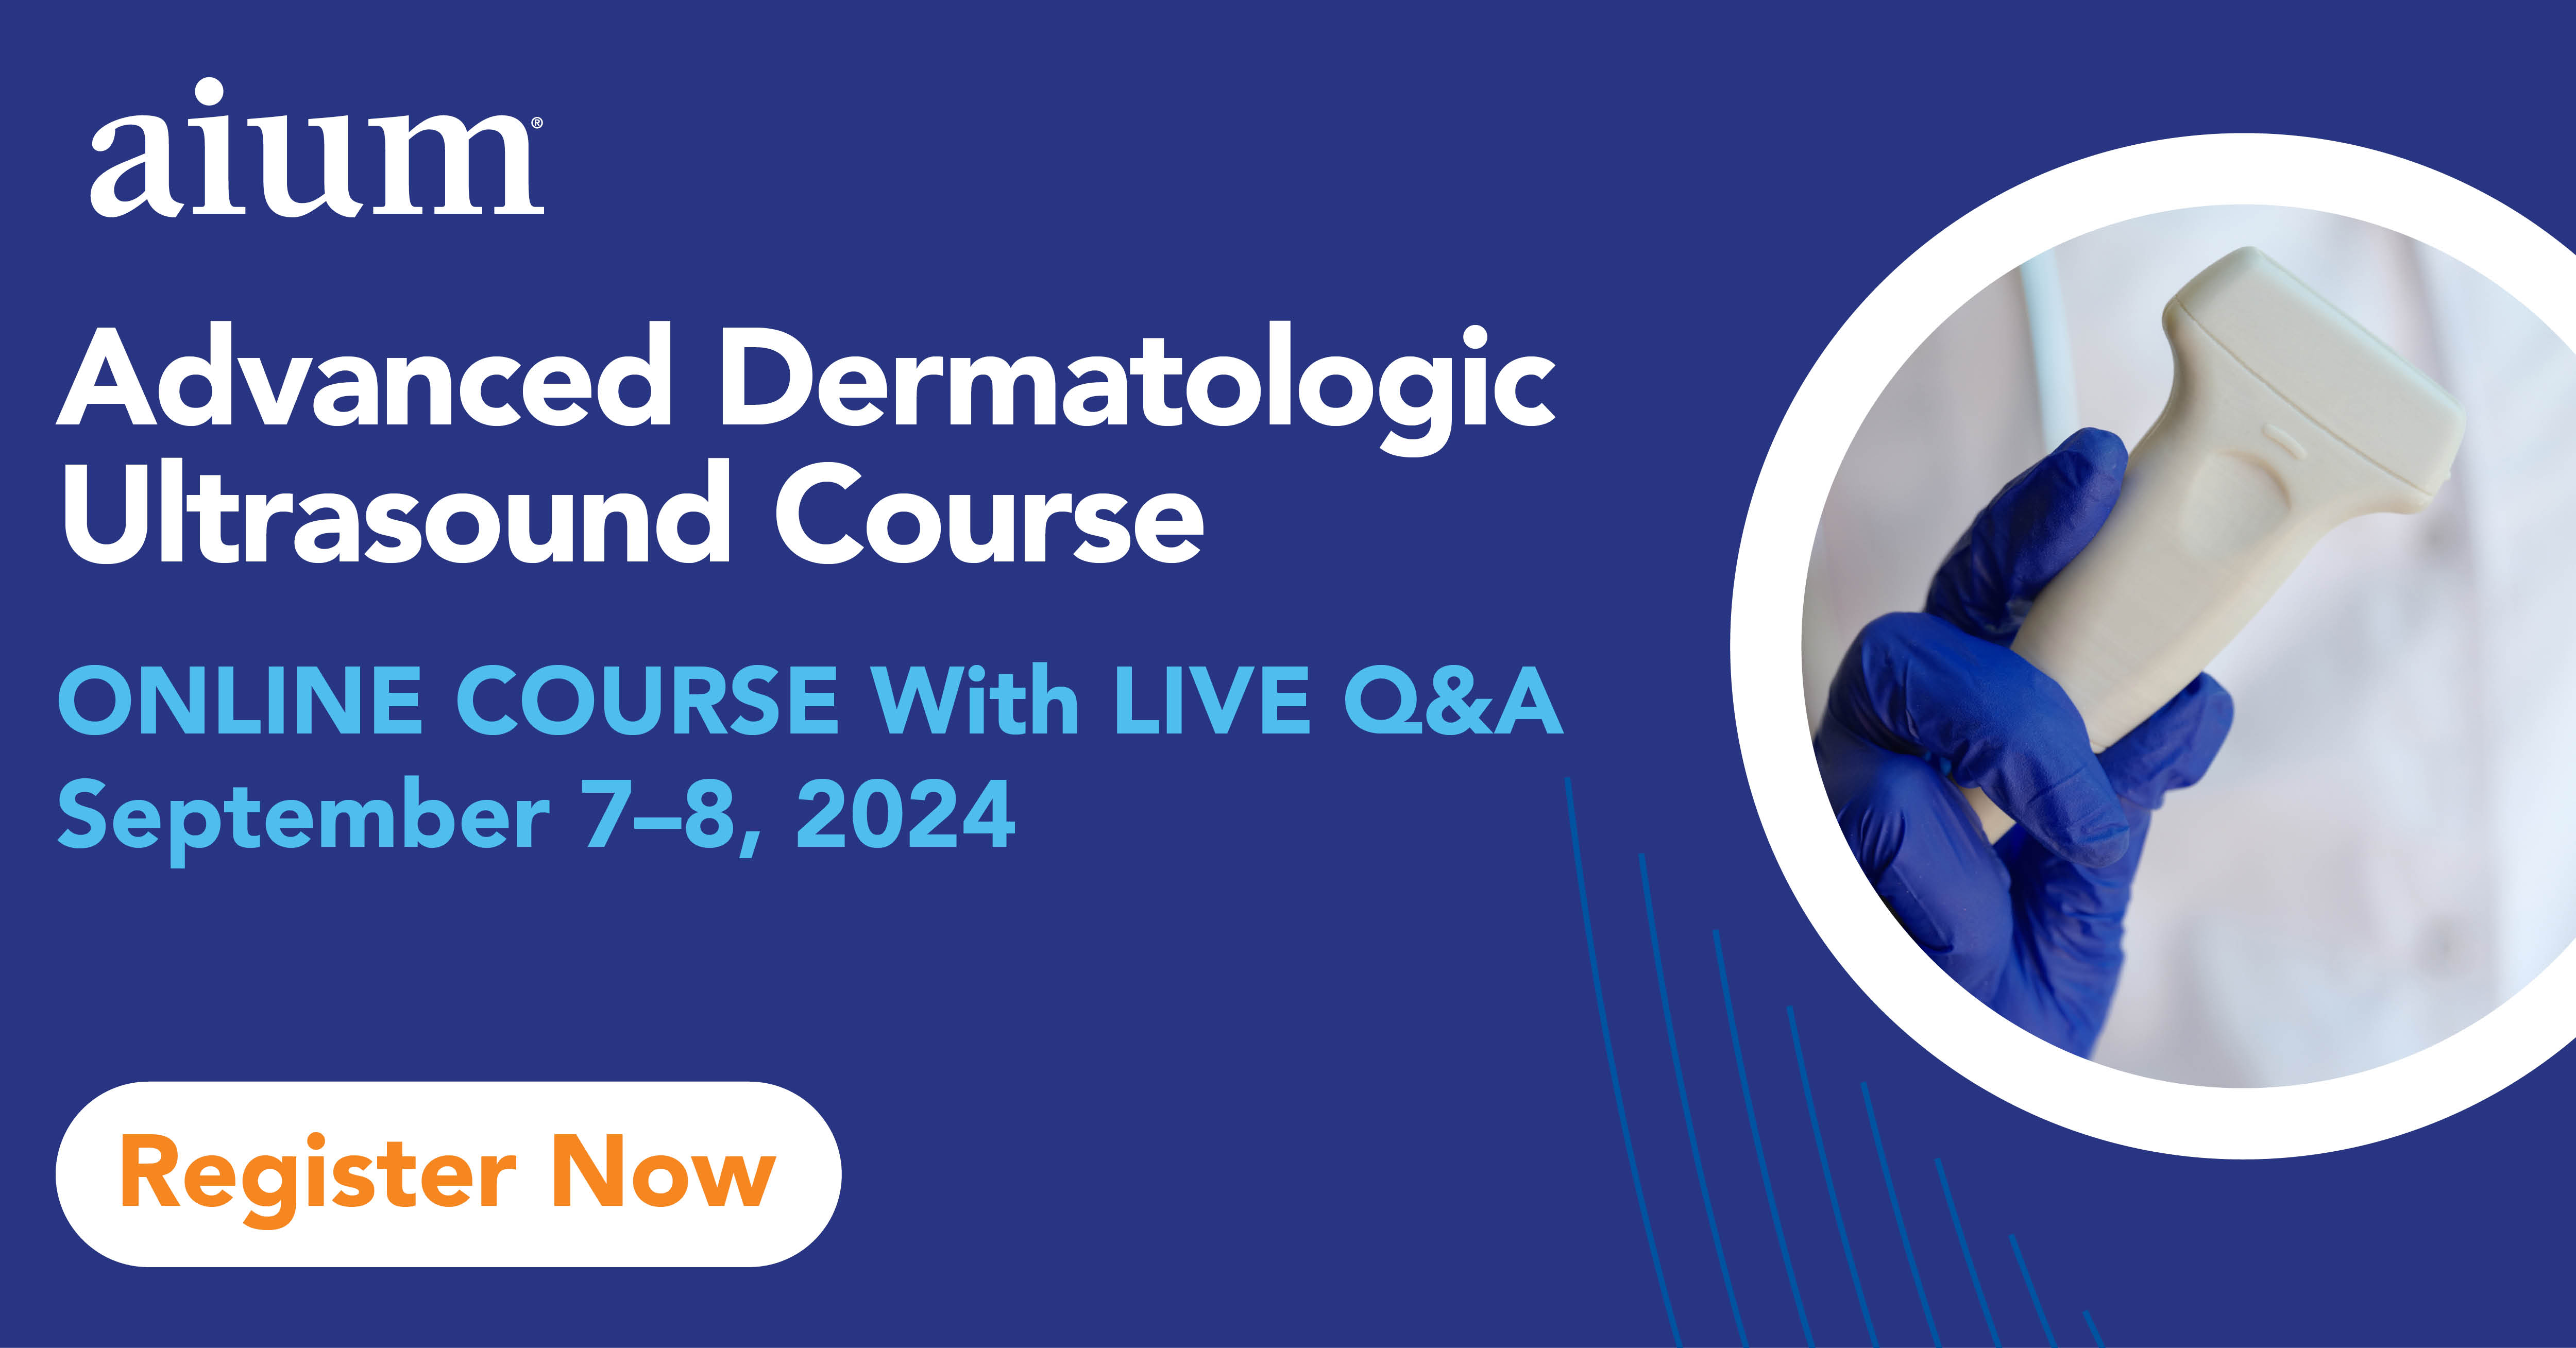 Advanced Dermatologic Ultrasound Course Online Sourse with Live Q&A, Sept 7-8, 2024